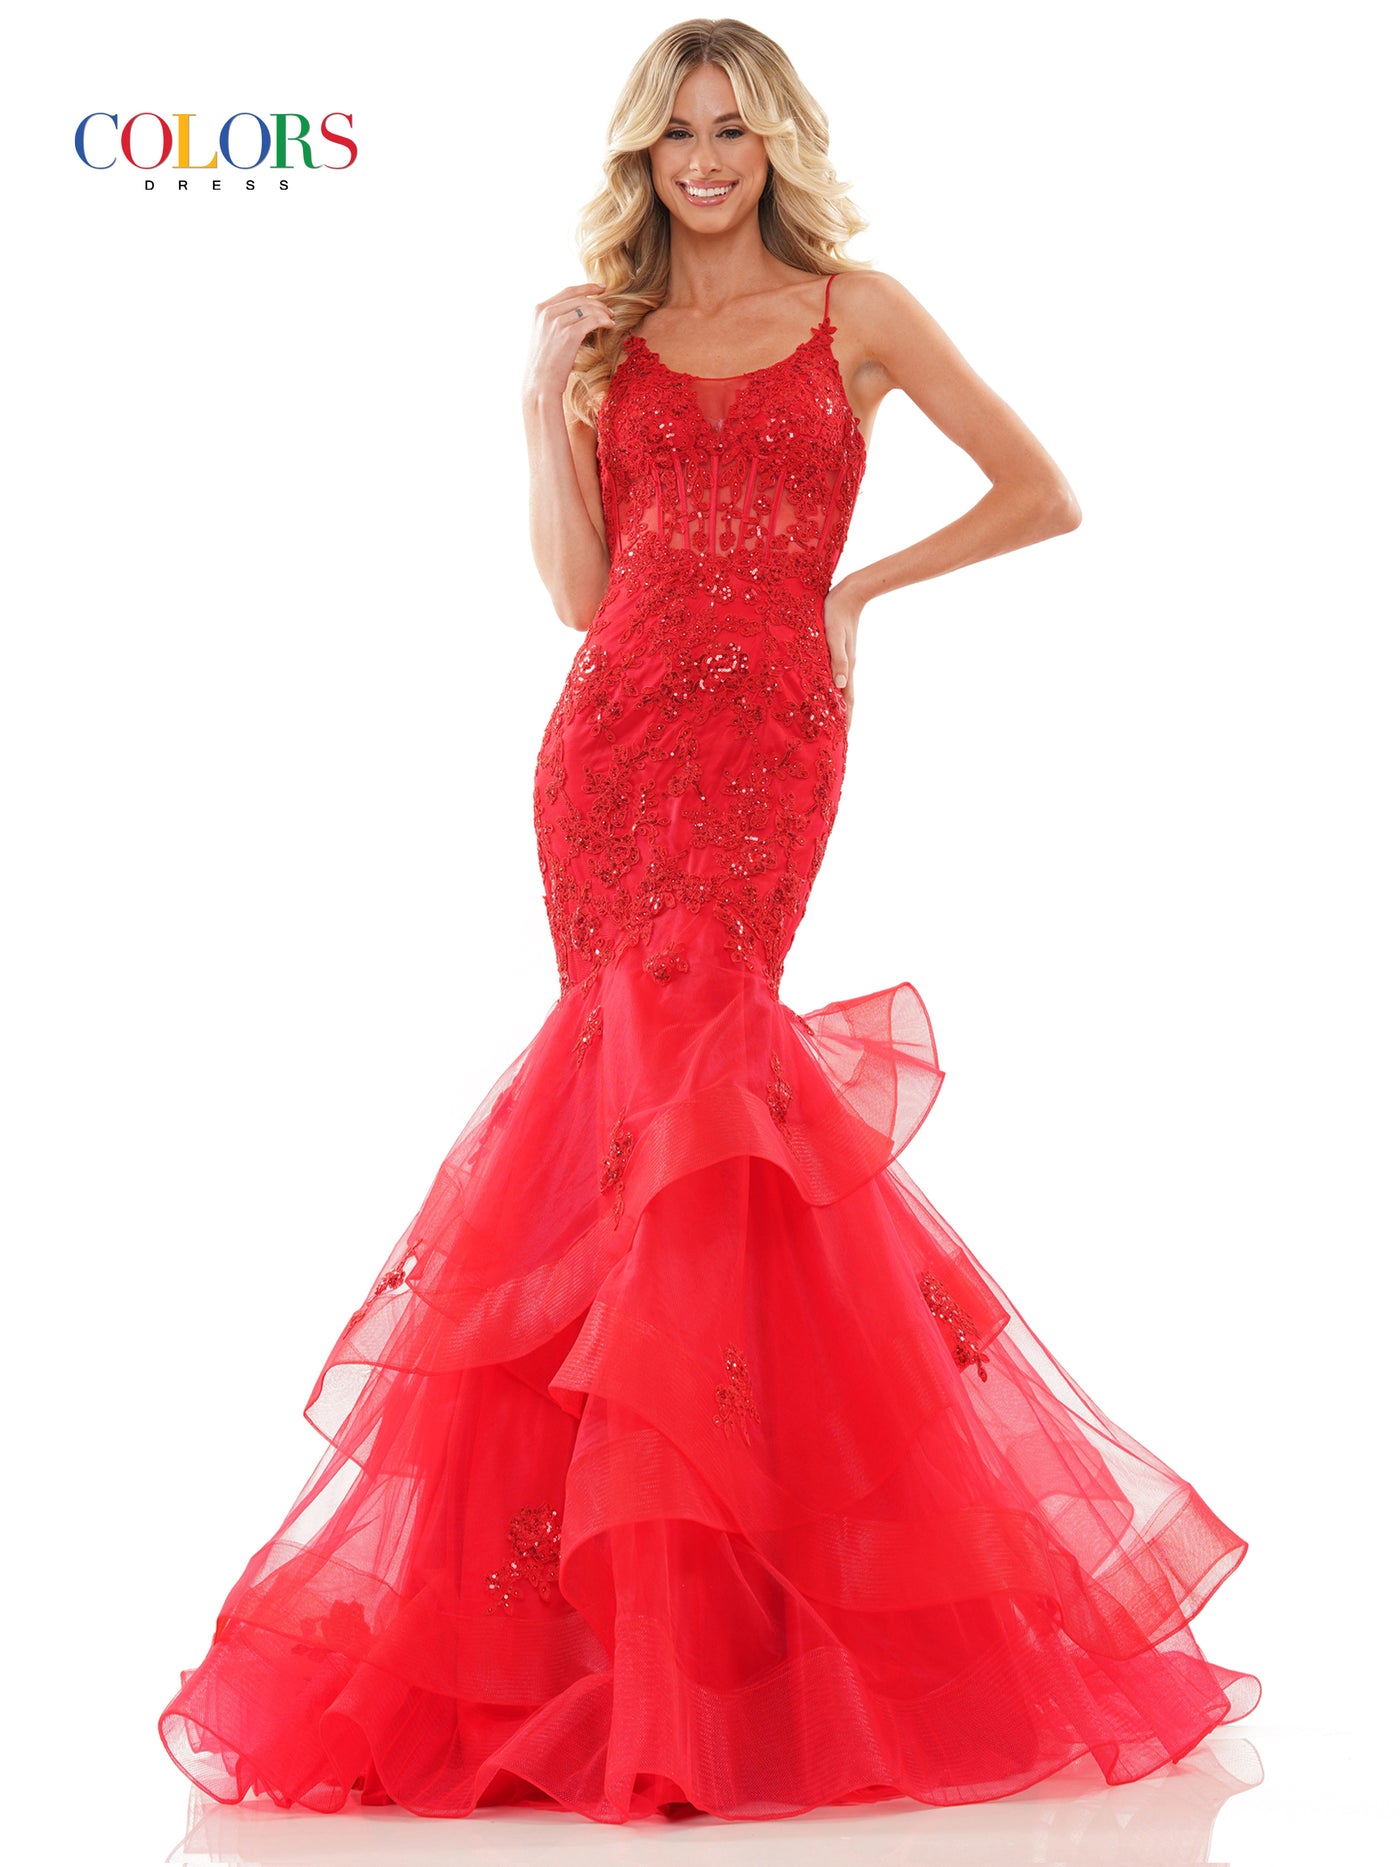 Colors Dress 2899 Red Mermaid Prom Dress